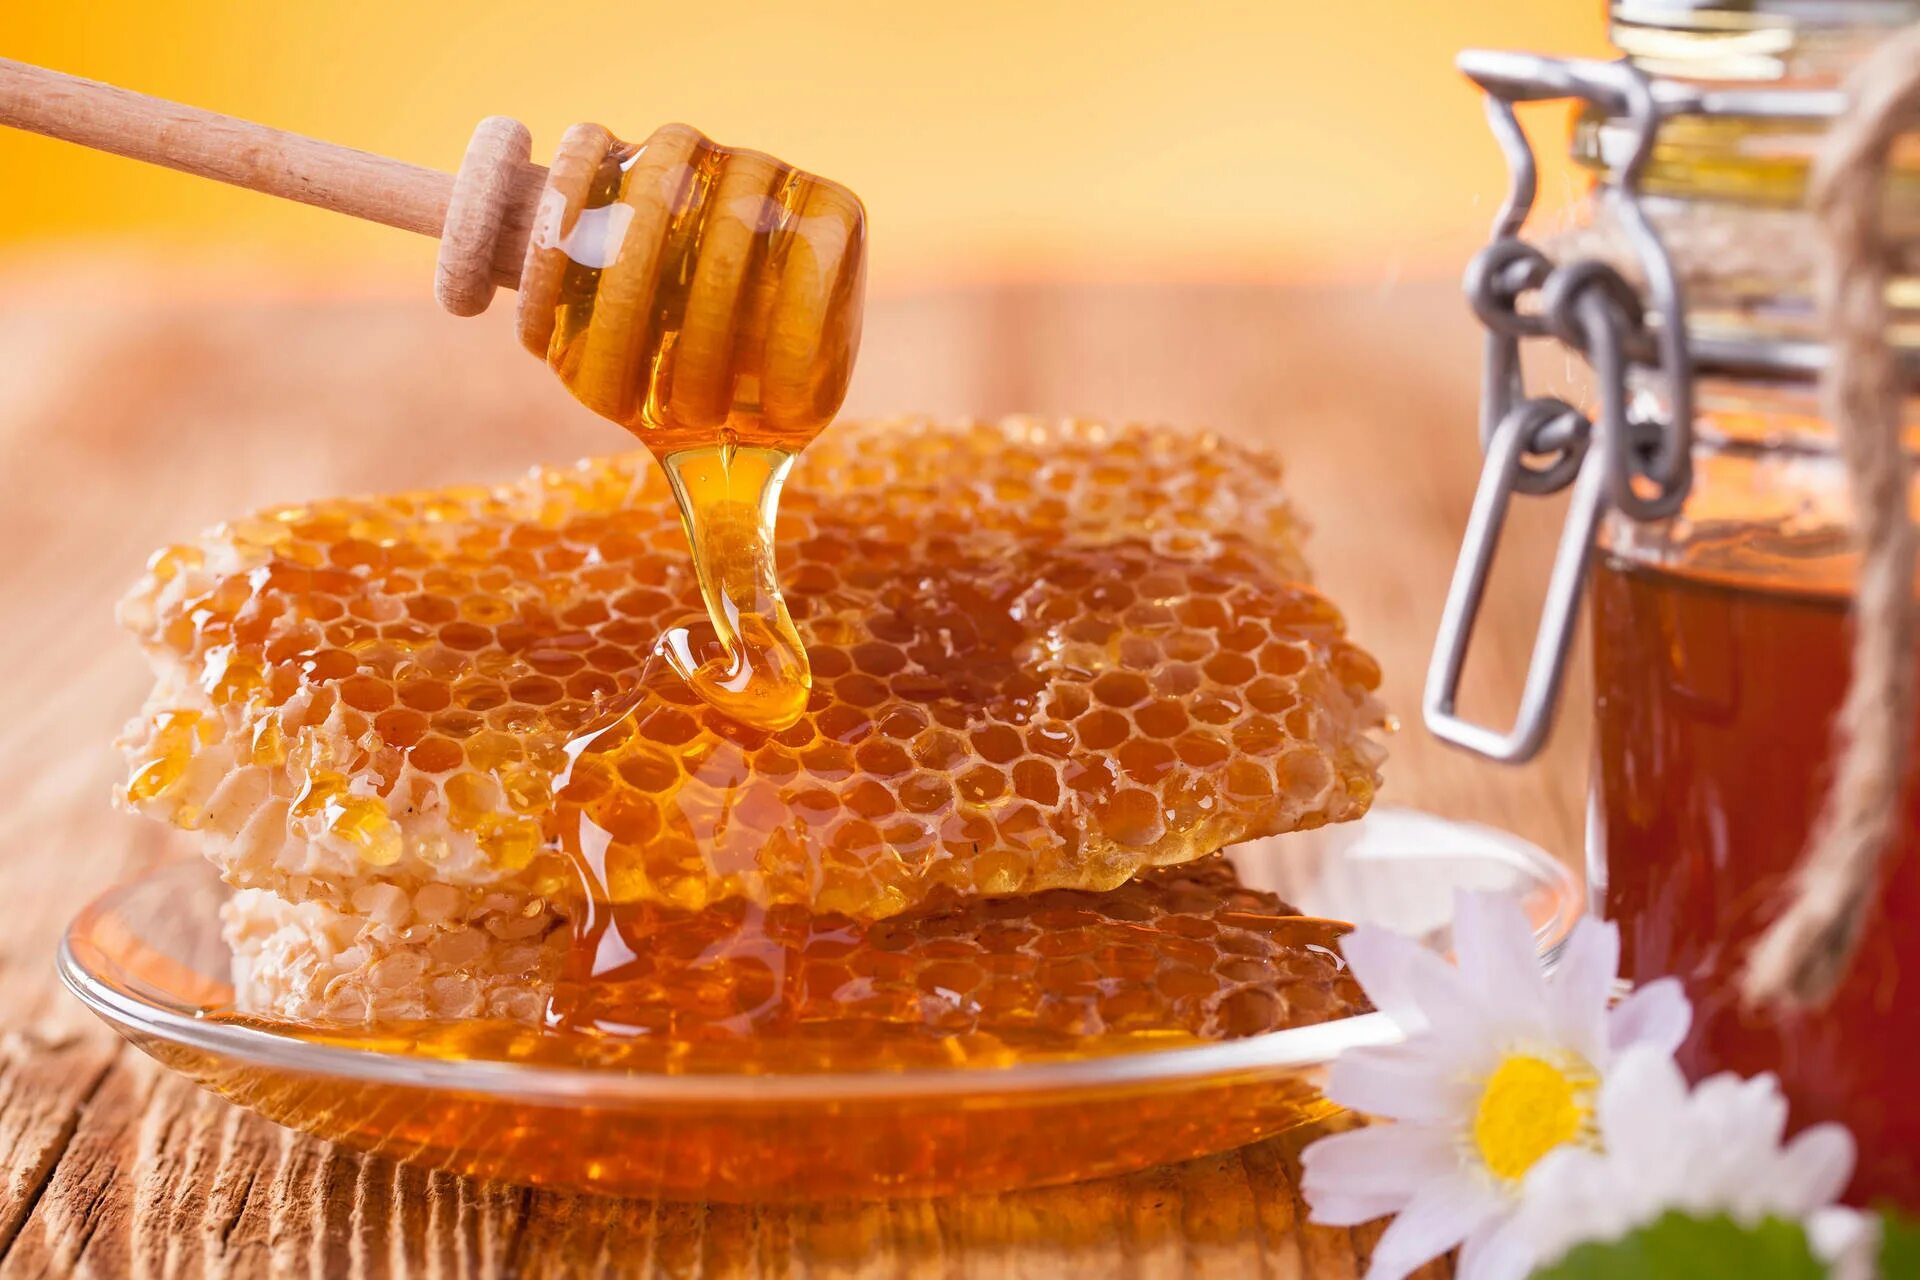 Much honey. Пчелиный мёд. Мёд в сотах. Соты меда. Фестиваль меда.